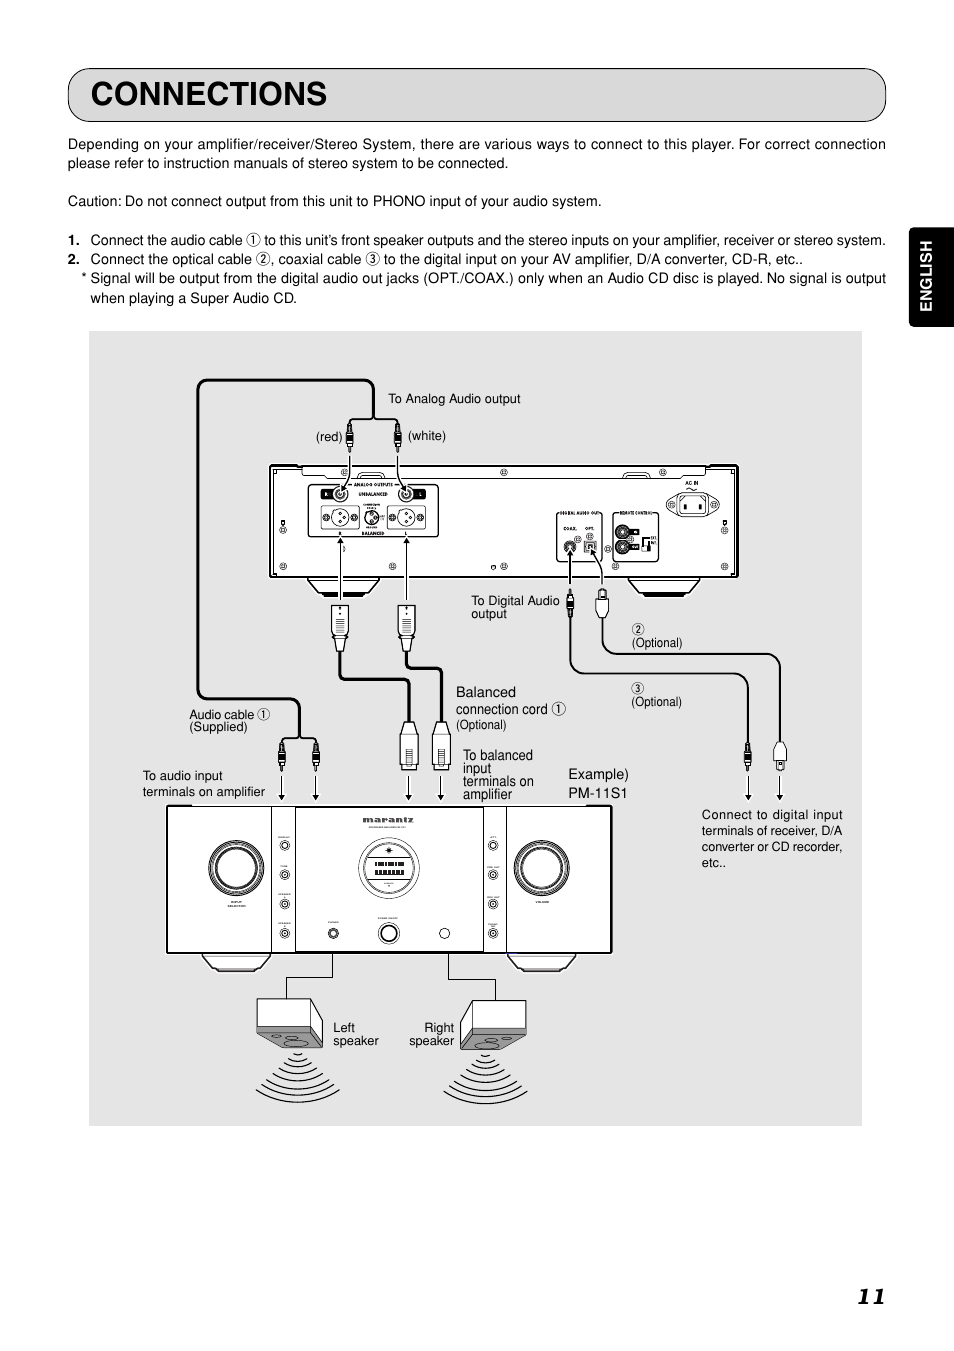 Connections, English, Operate | Marantz SA-11S1 User Manual | Page 16 / 29